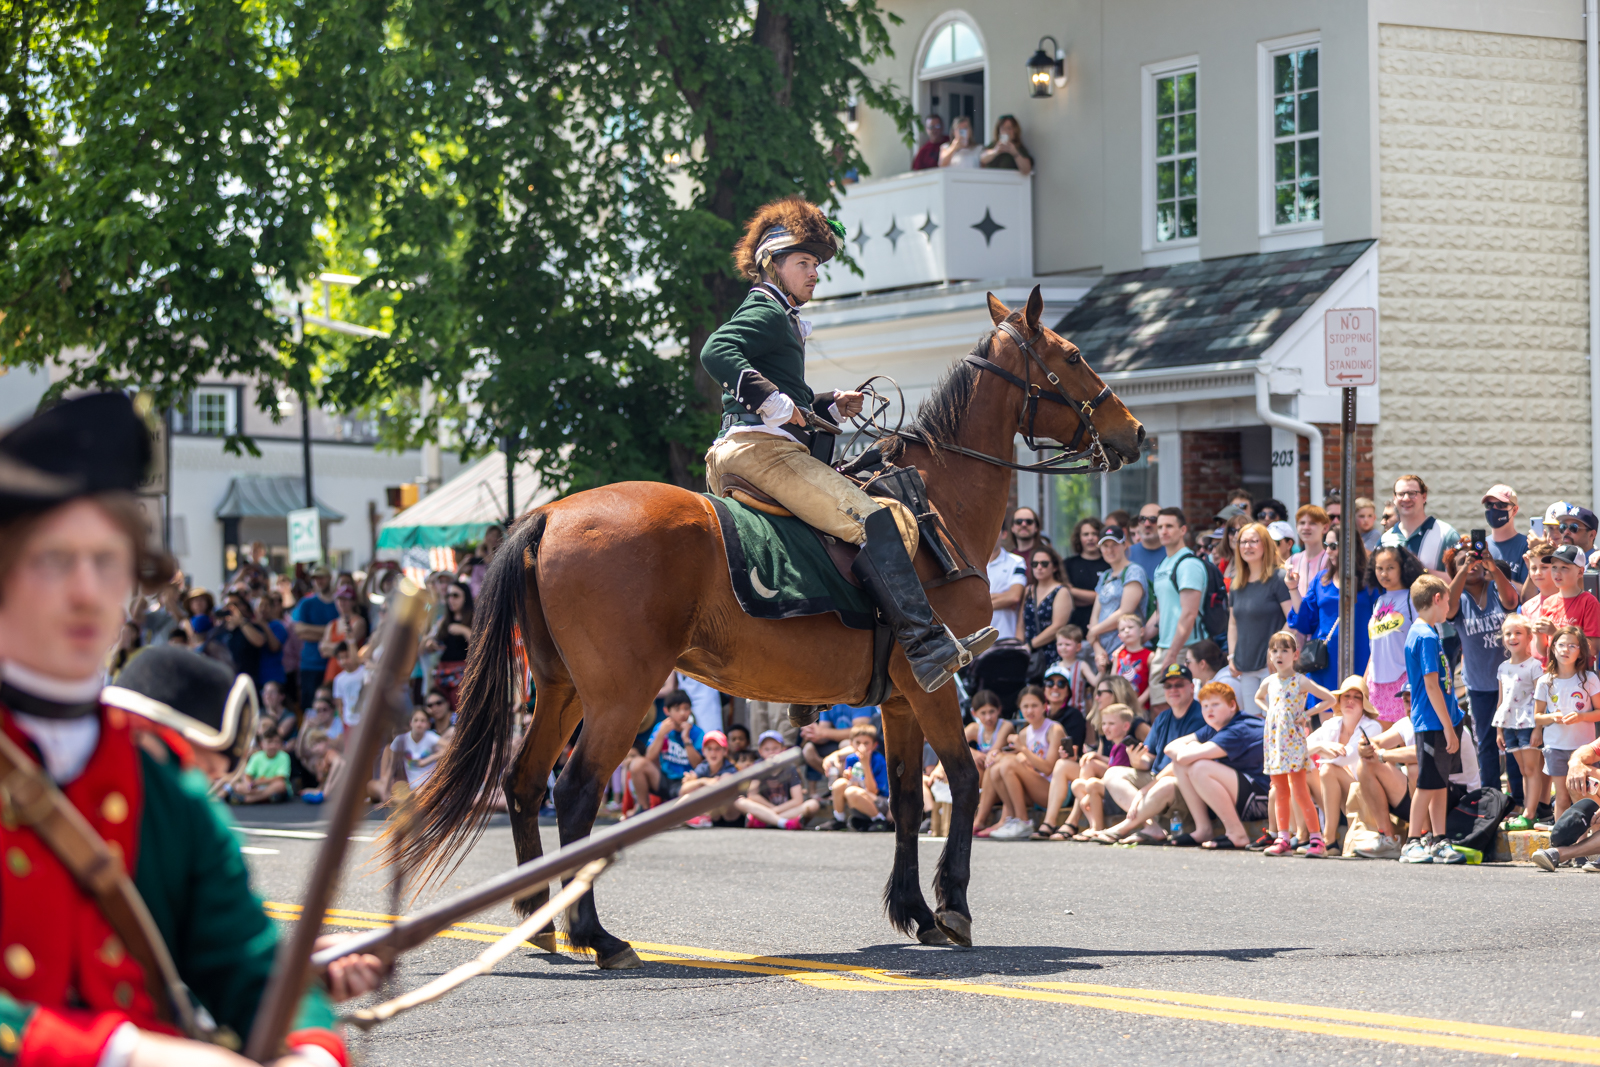 A Queen's Ranger on horseback